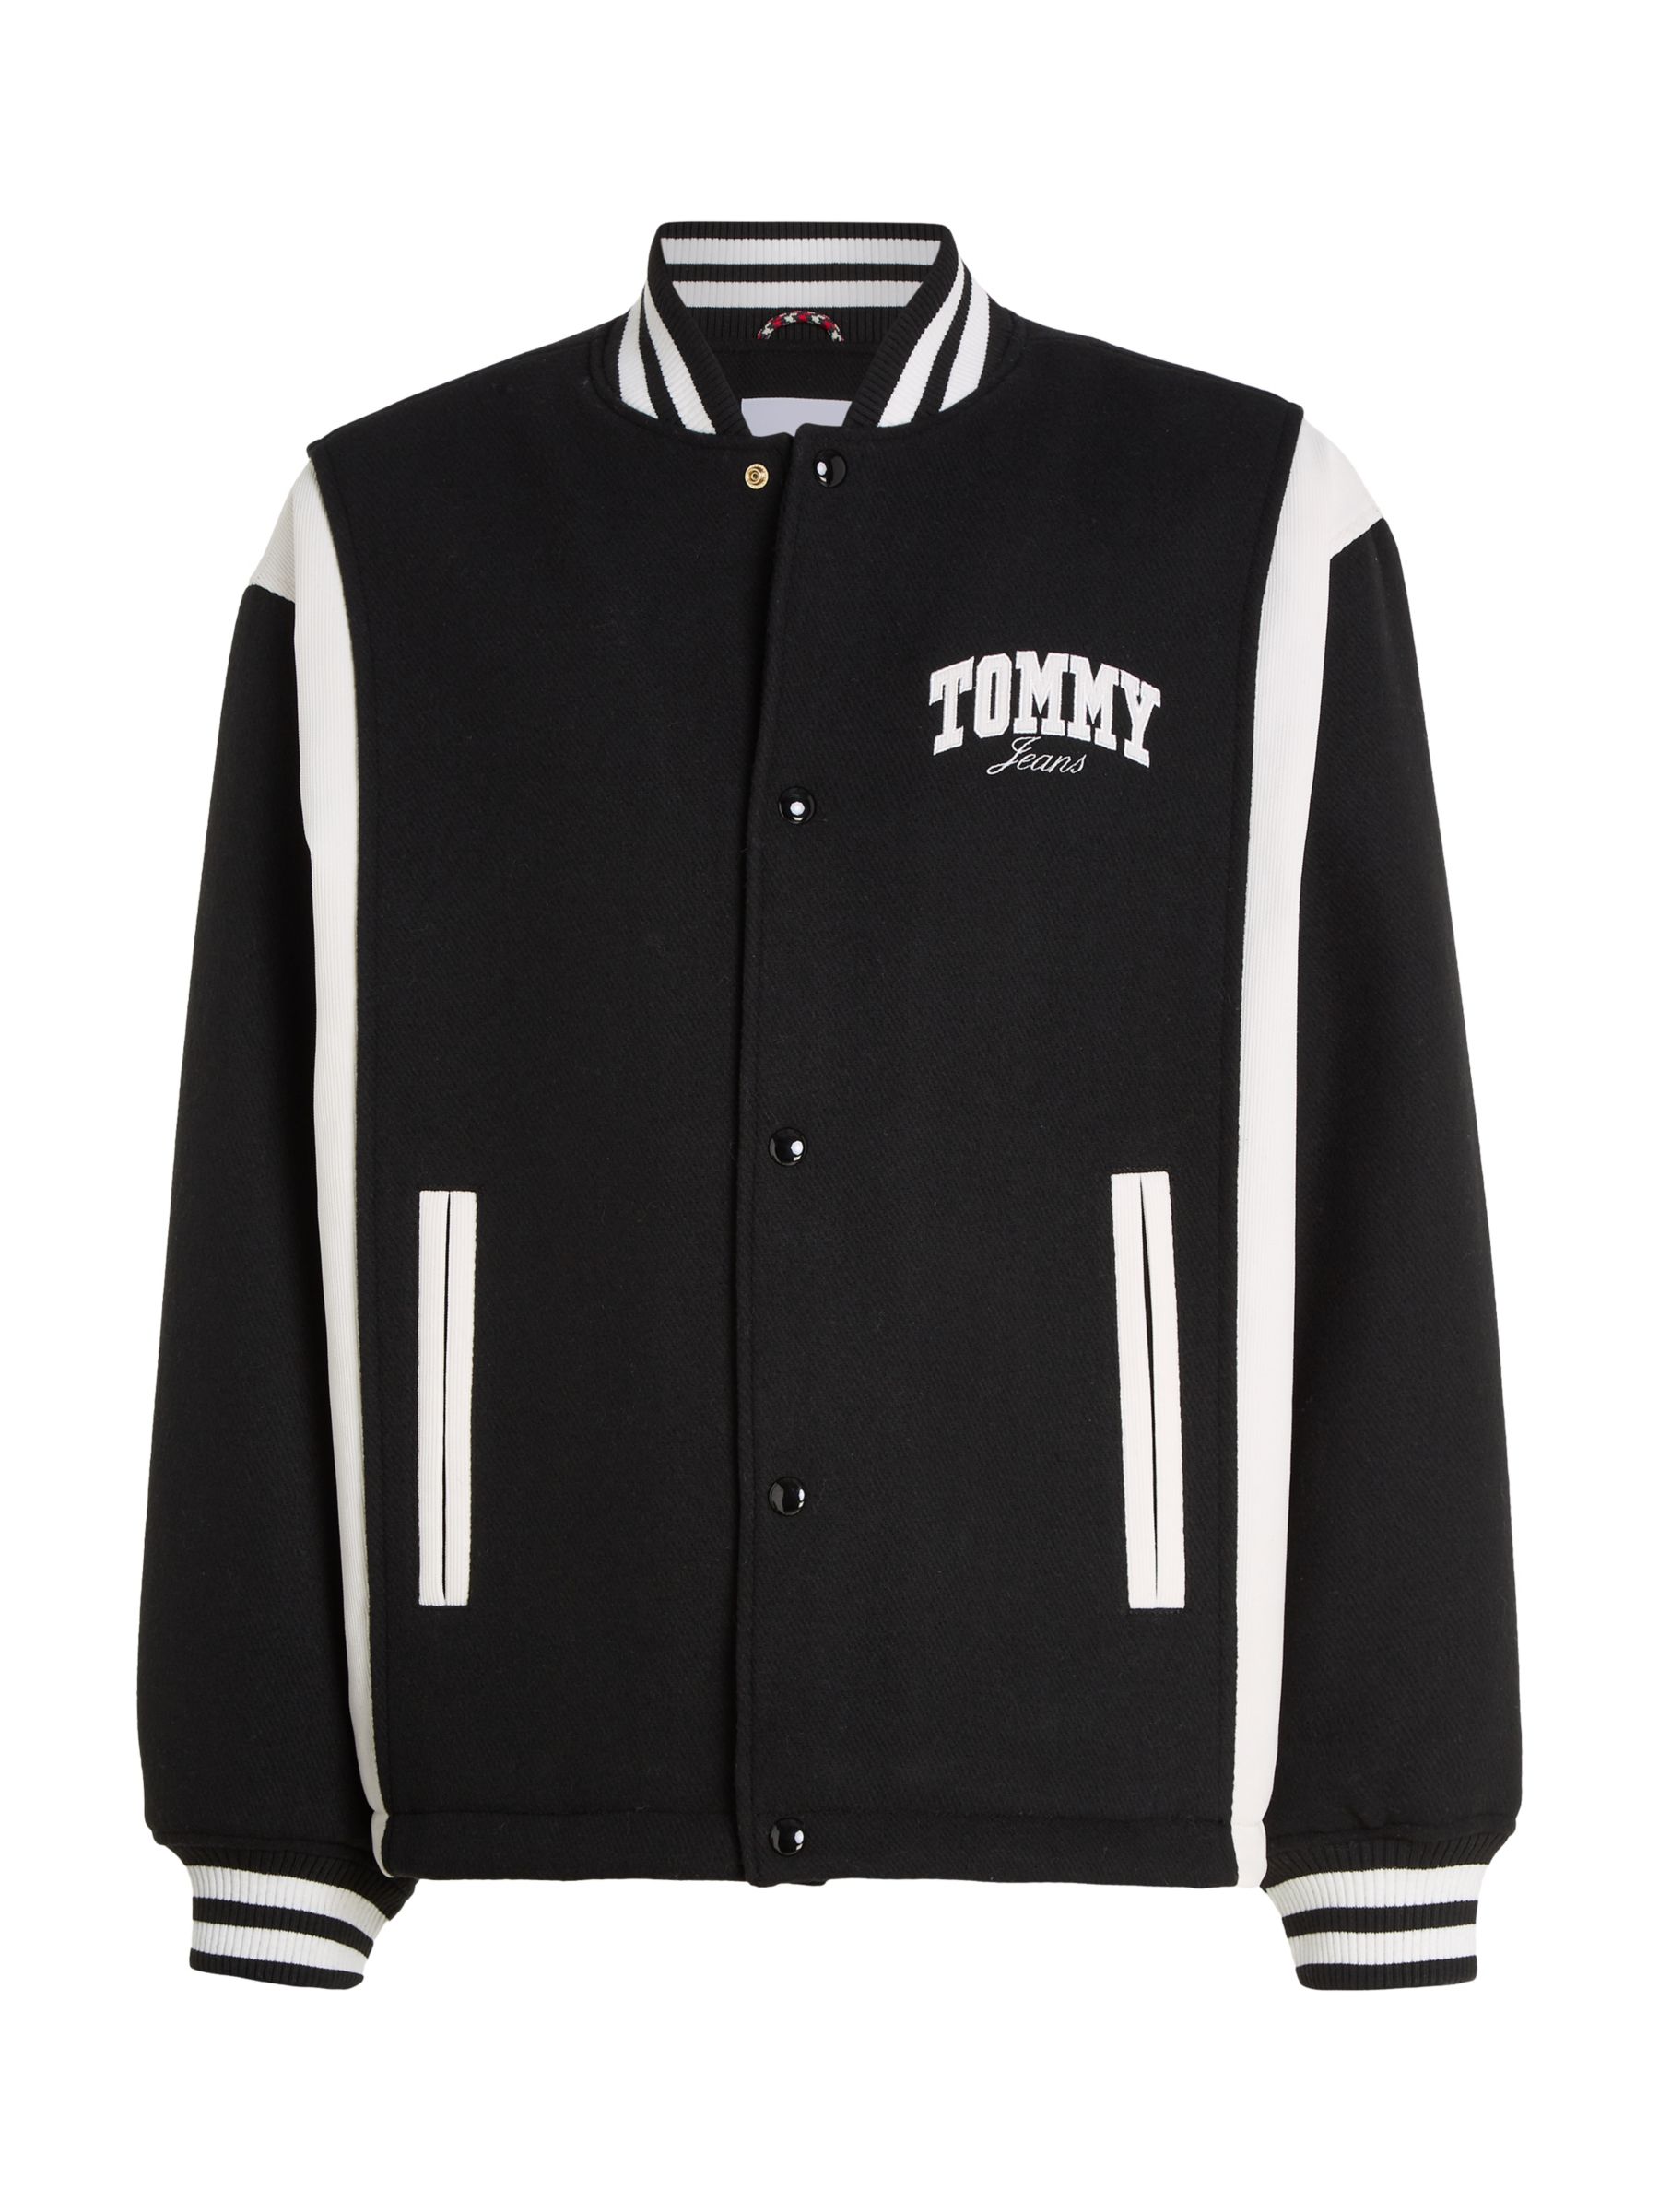 Tommy Jeans Varsity Bomber Jacket, Black/White at John Lewis & Partners